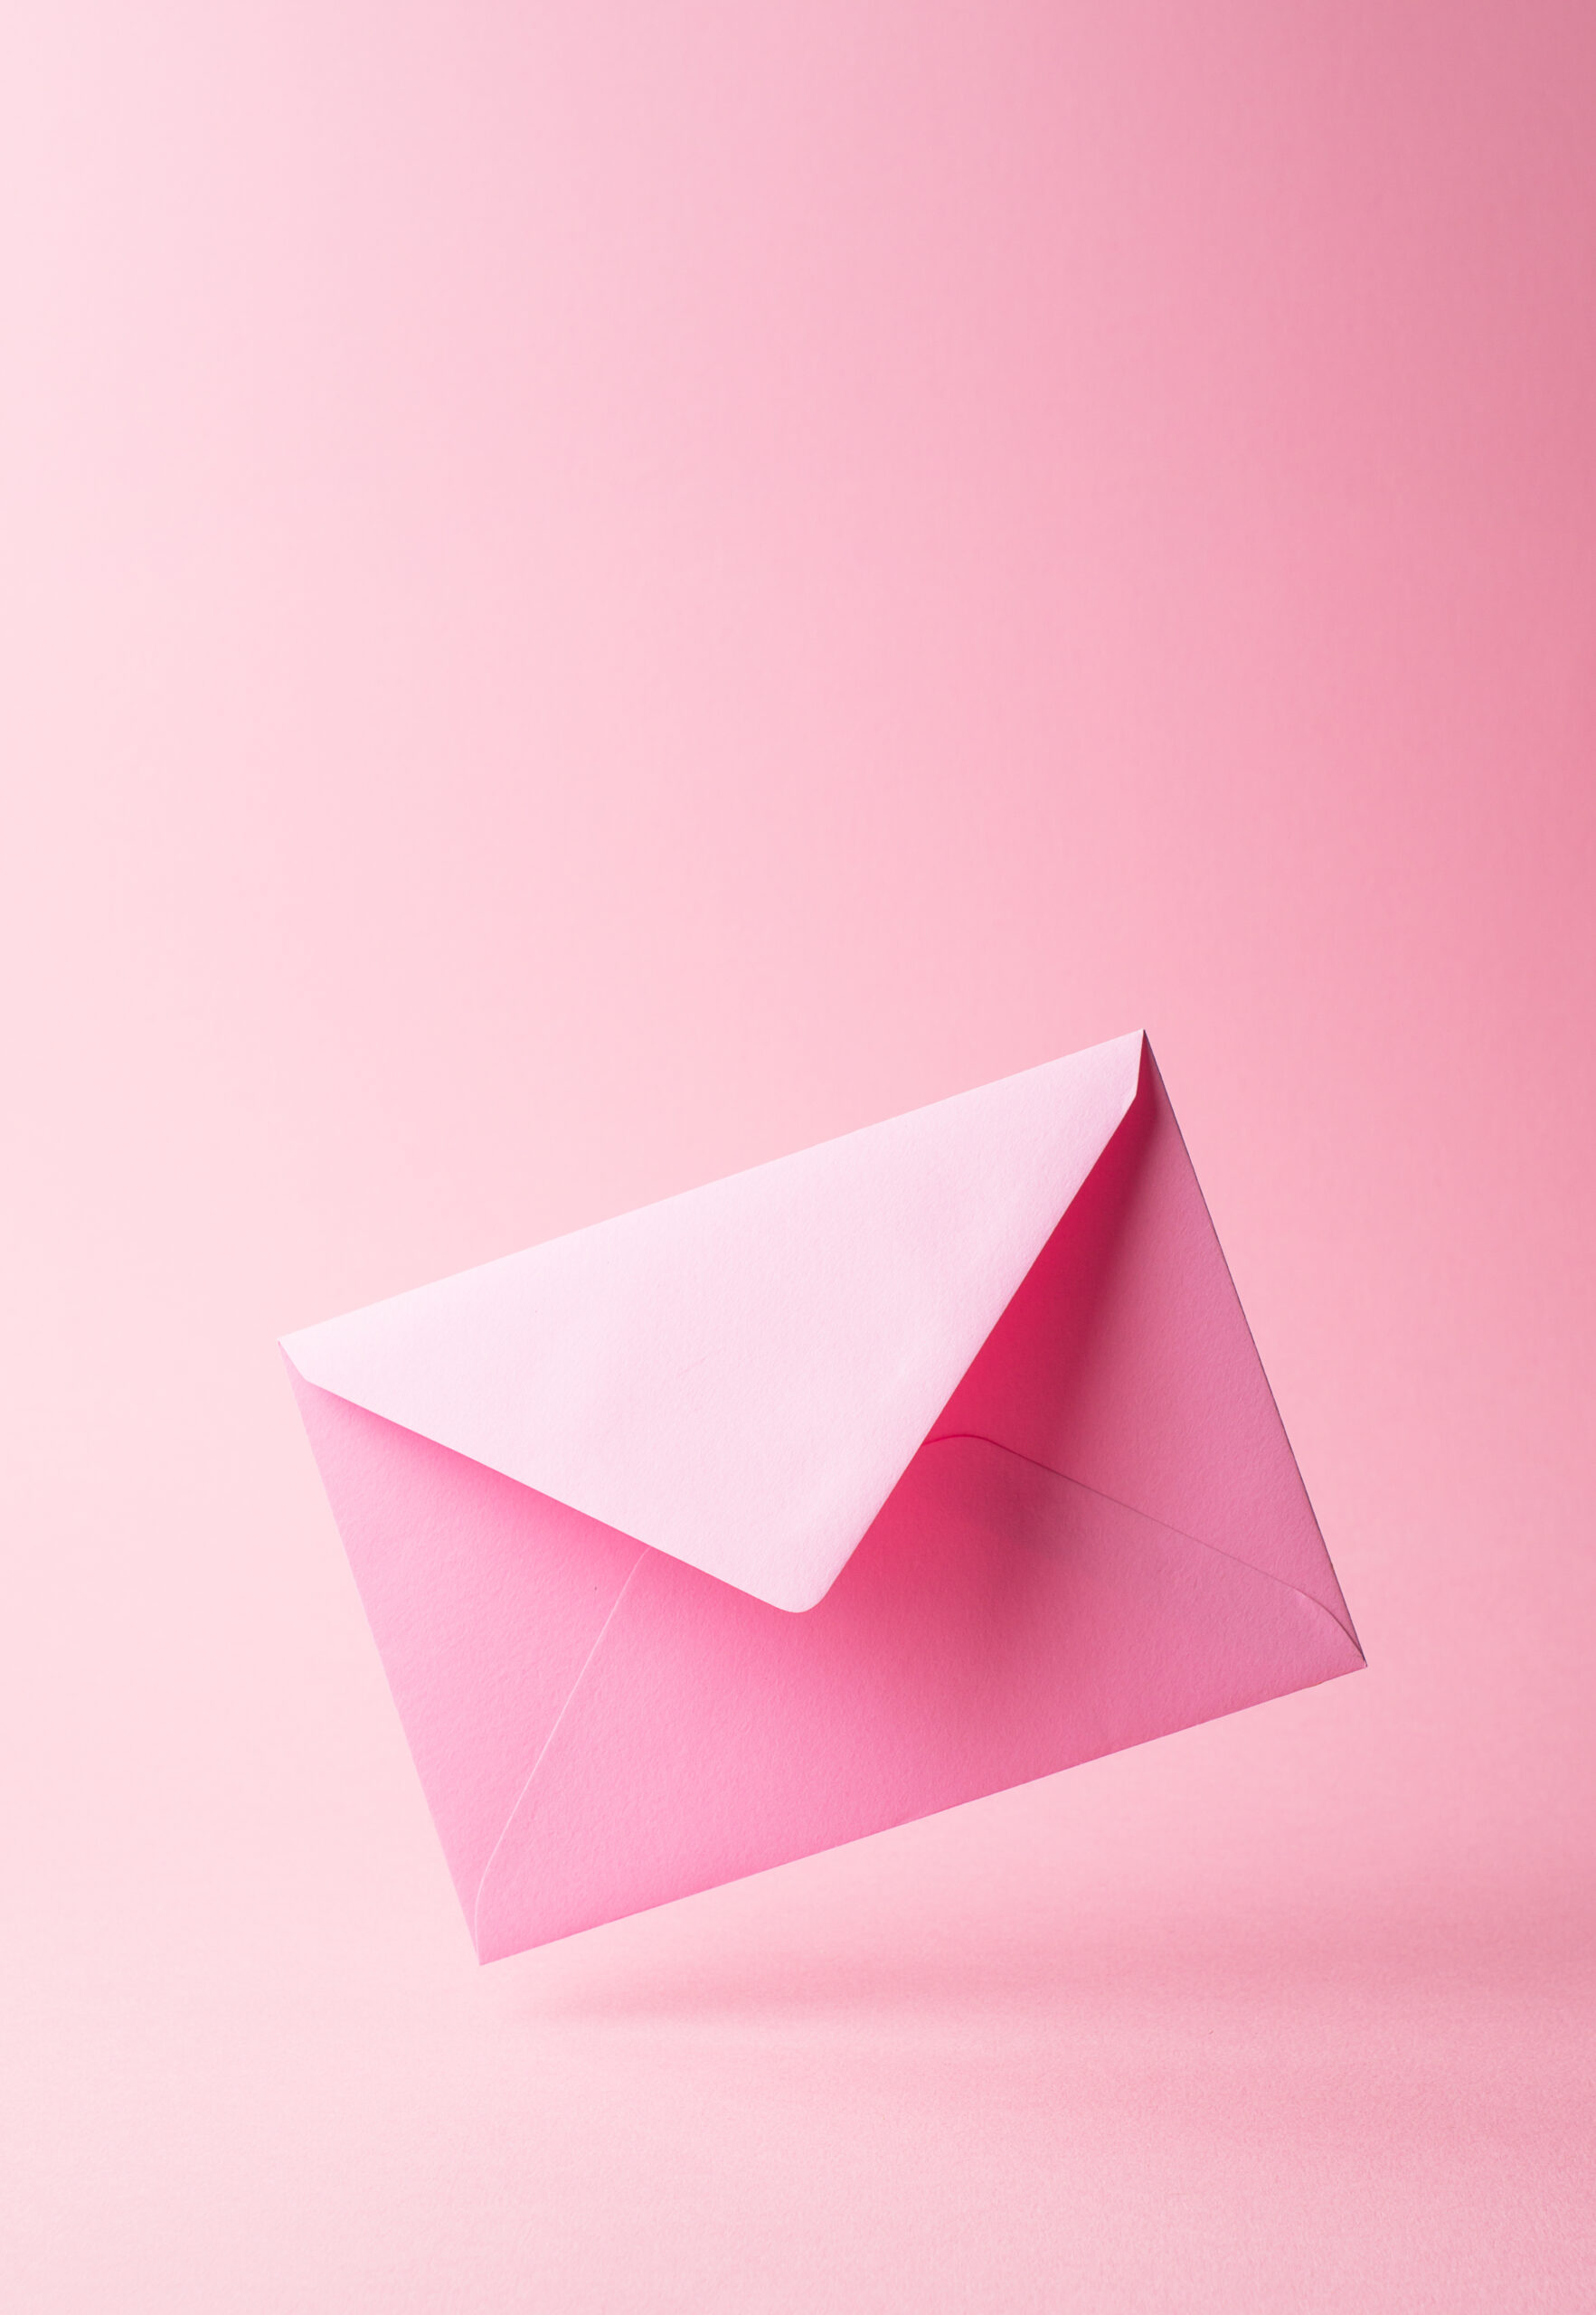 Pink envelope dropped over pink background